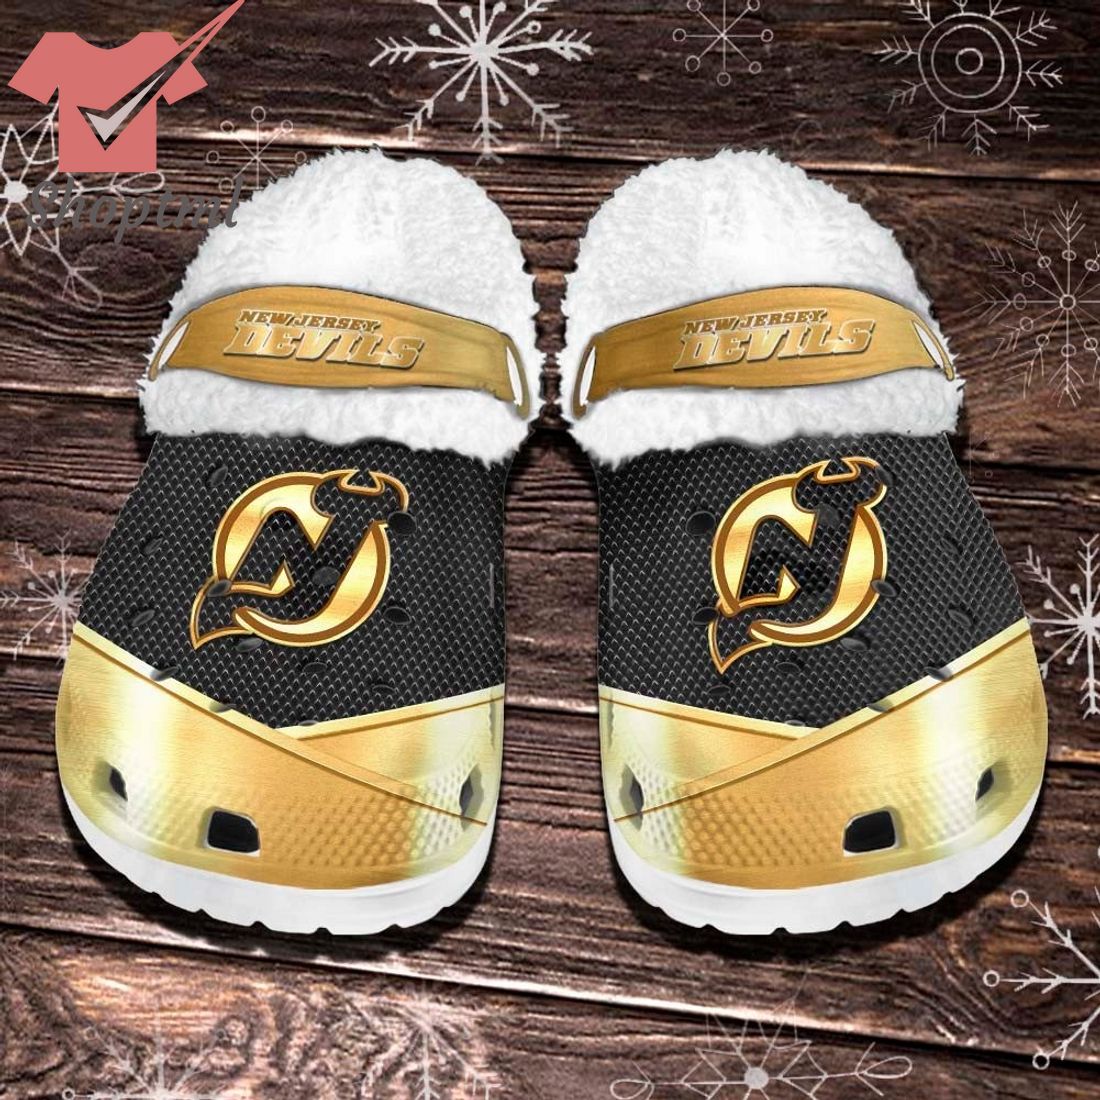 New Jersey Devils NHL Fleece Crocs Clogs Shoes